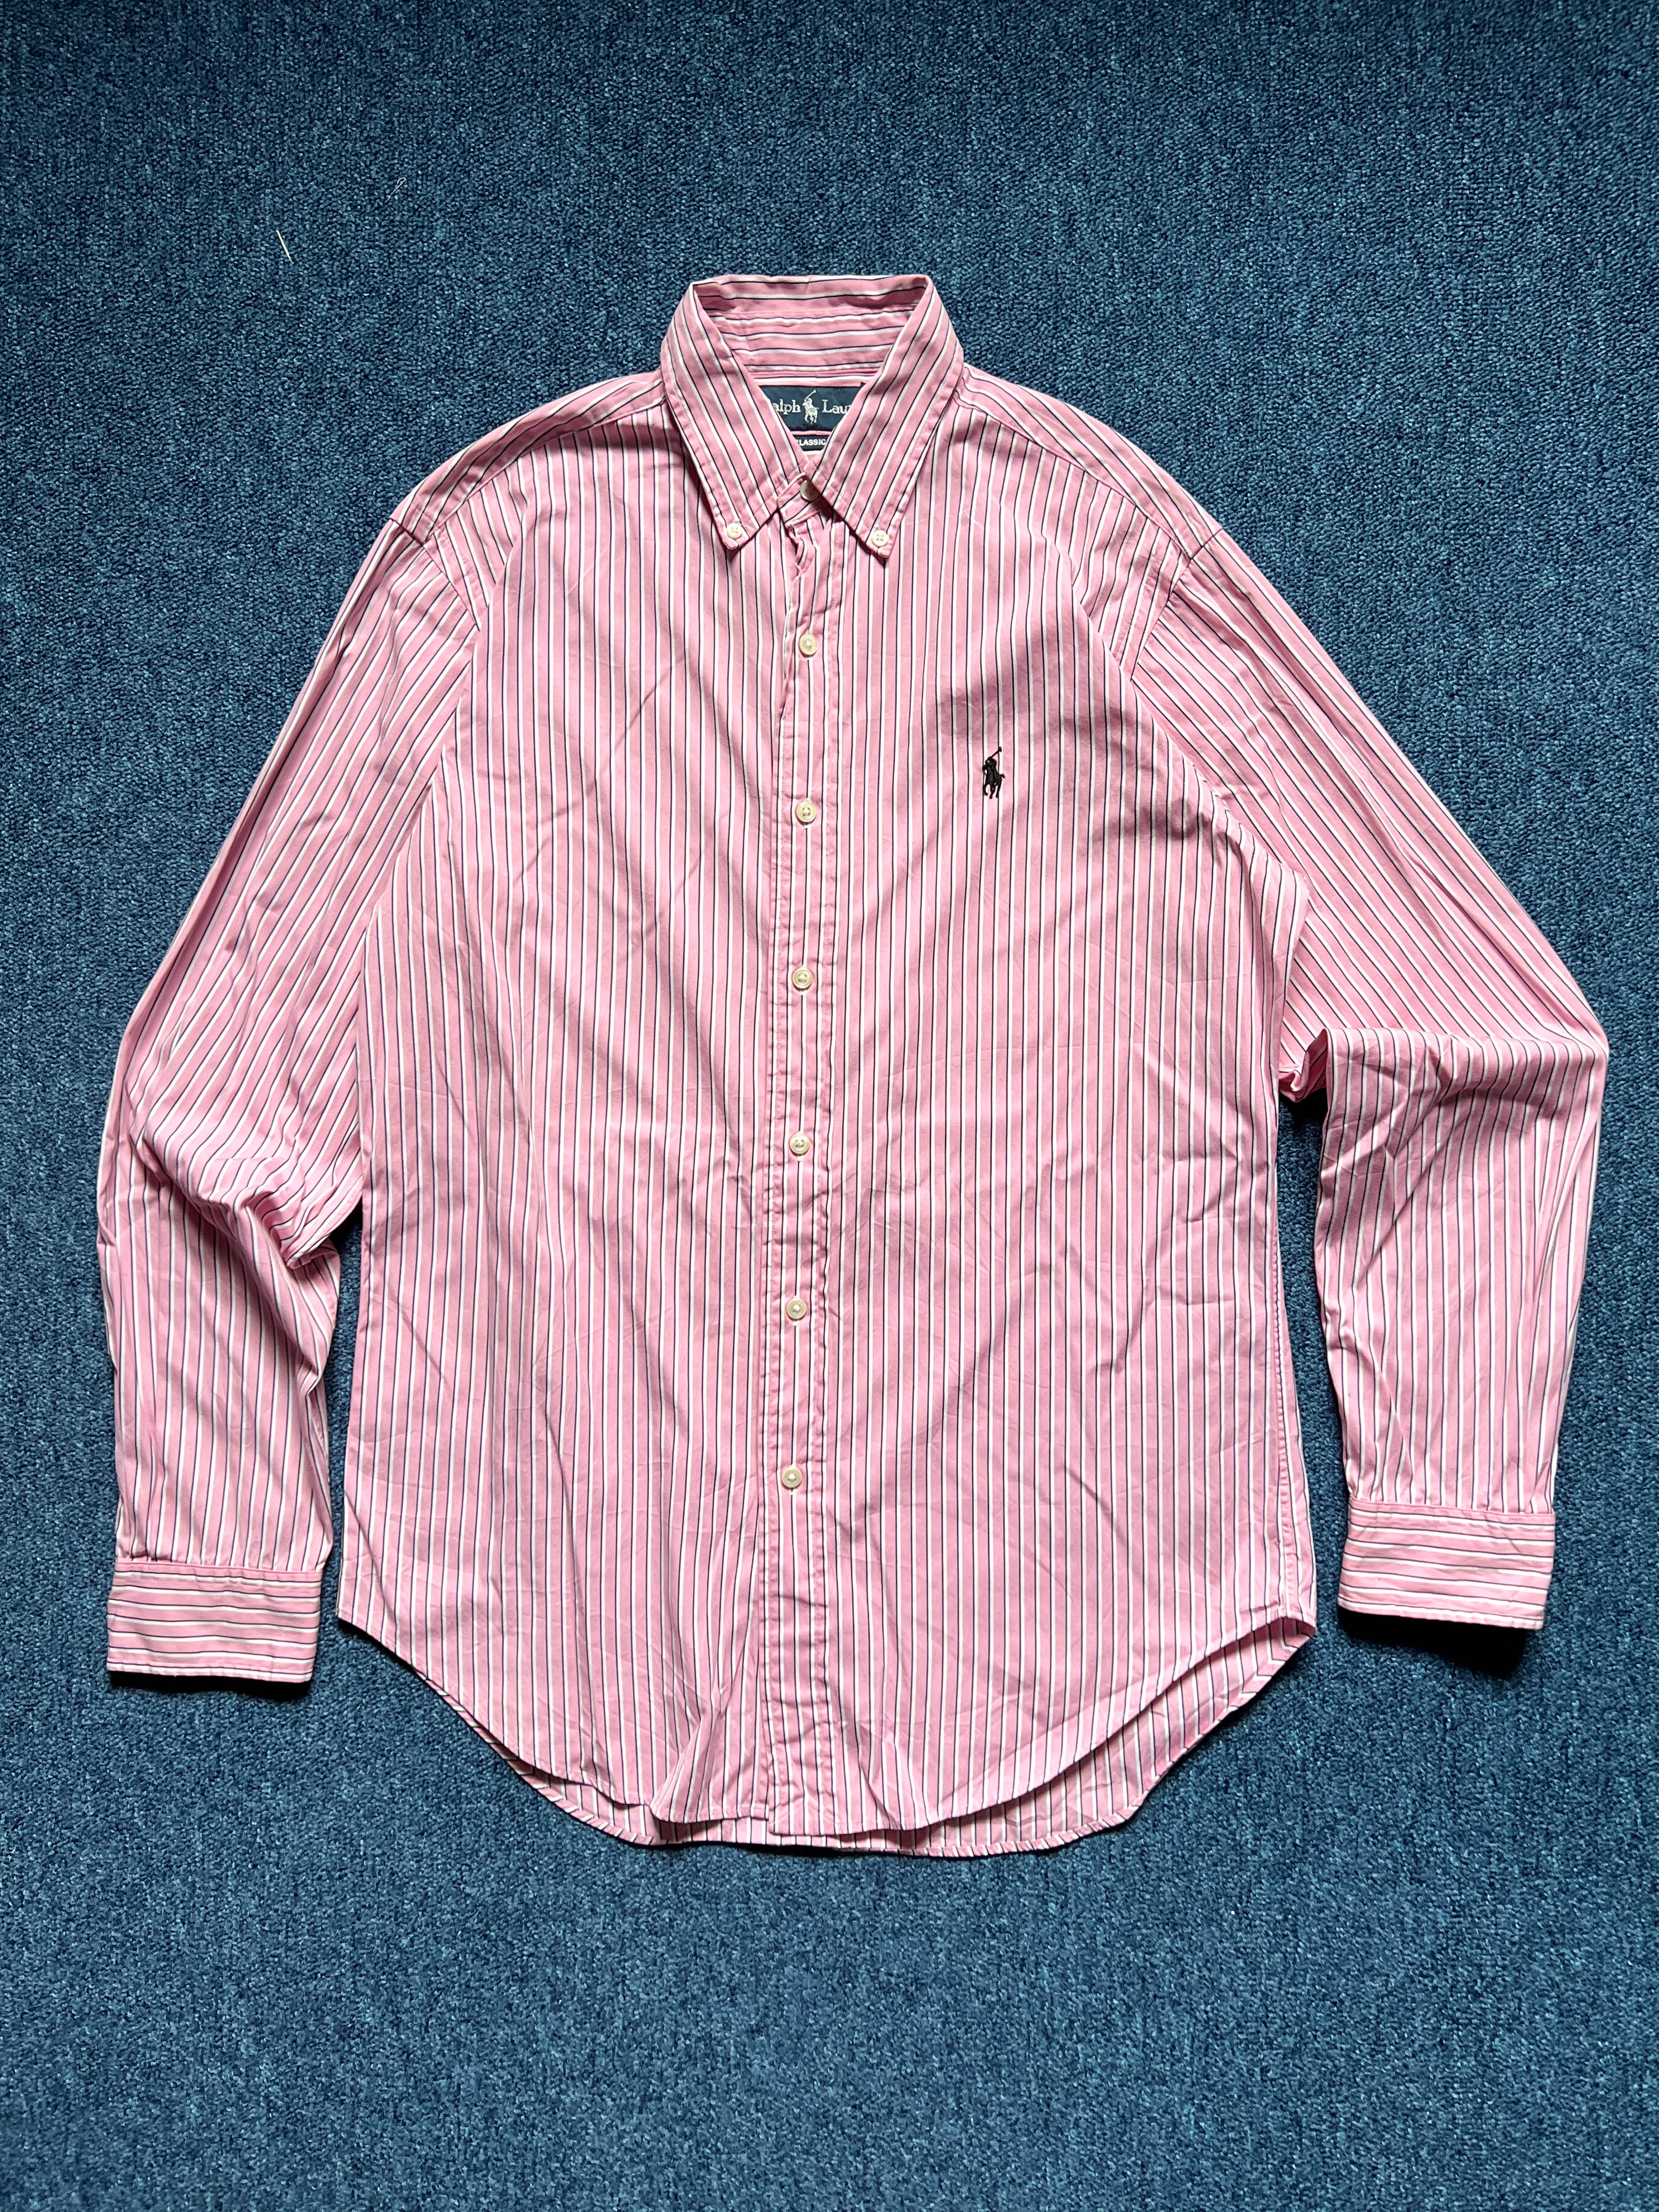 Polo by Ralph Lauren pink stripe shirts